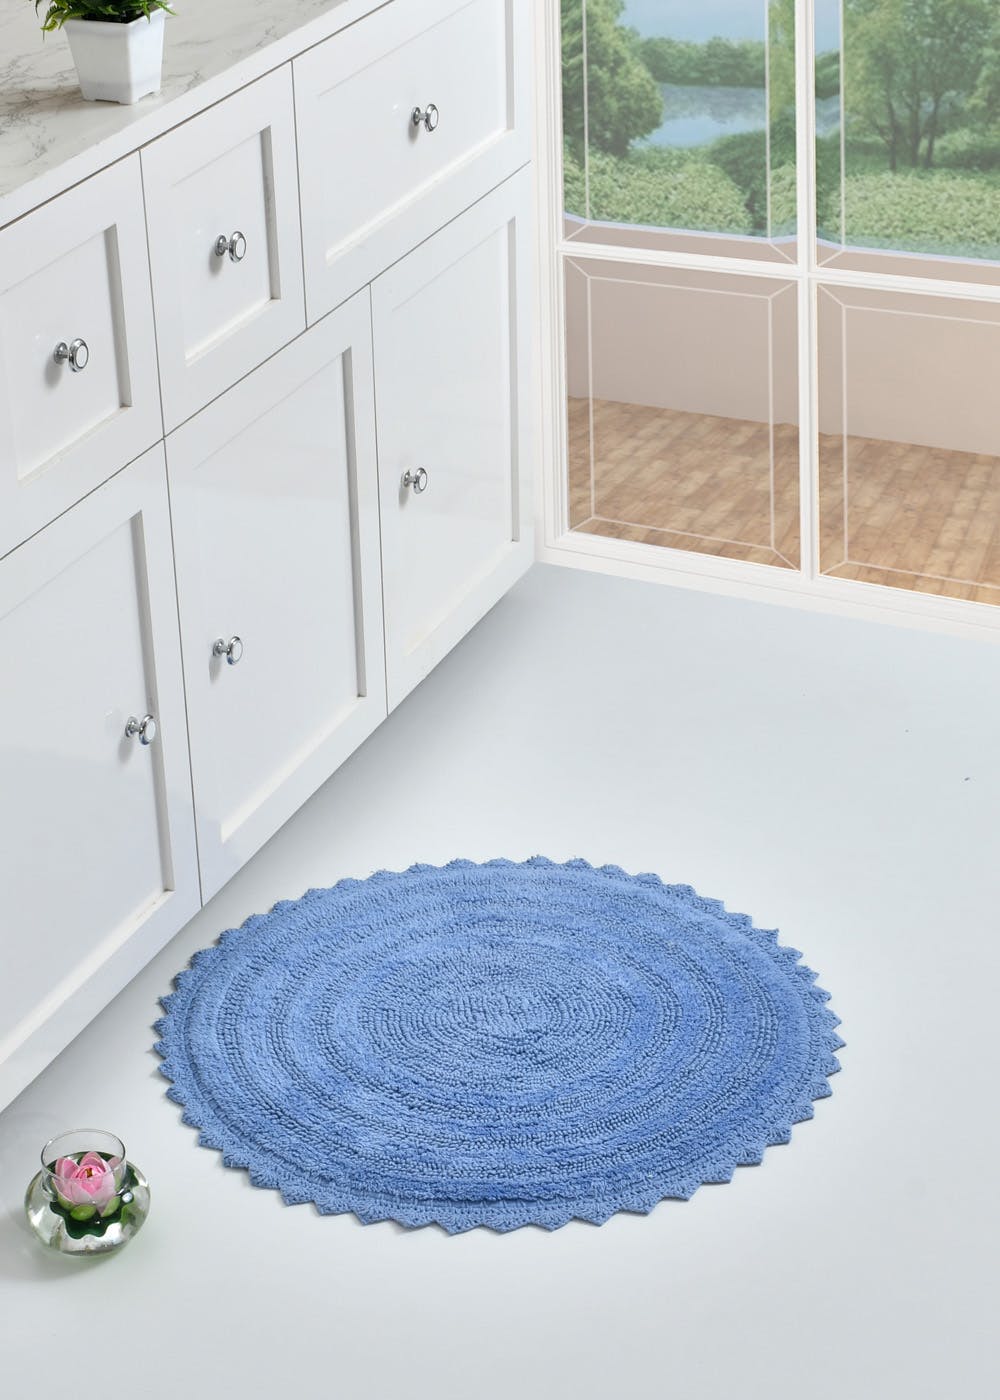 Get 100% Cotton Reversible Bloom Round Bathmat/Doormat at ₹ 699 | LBB Shop